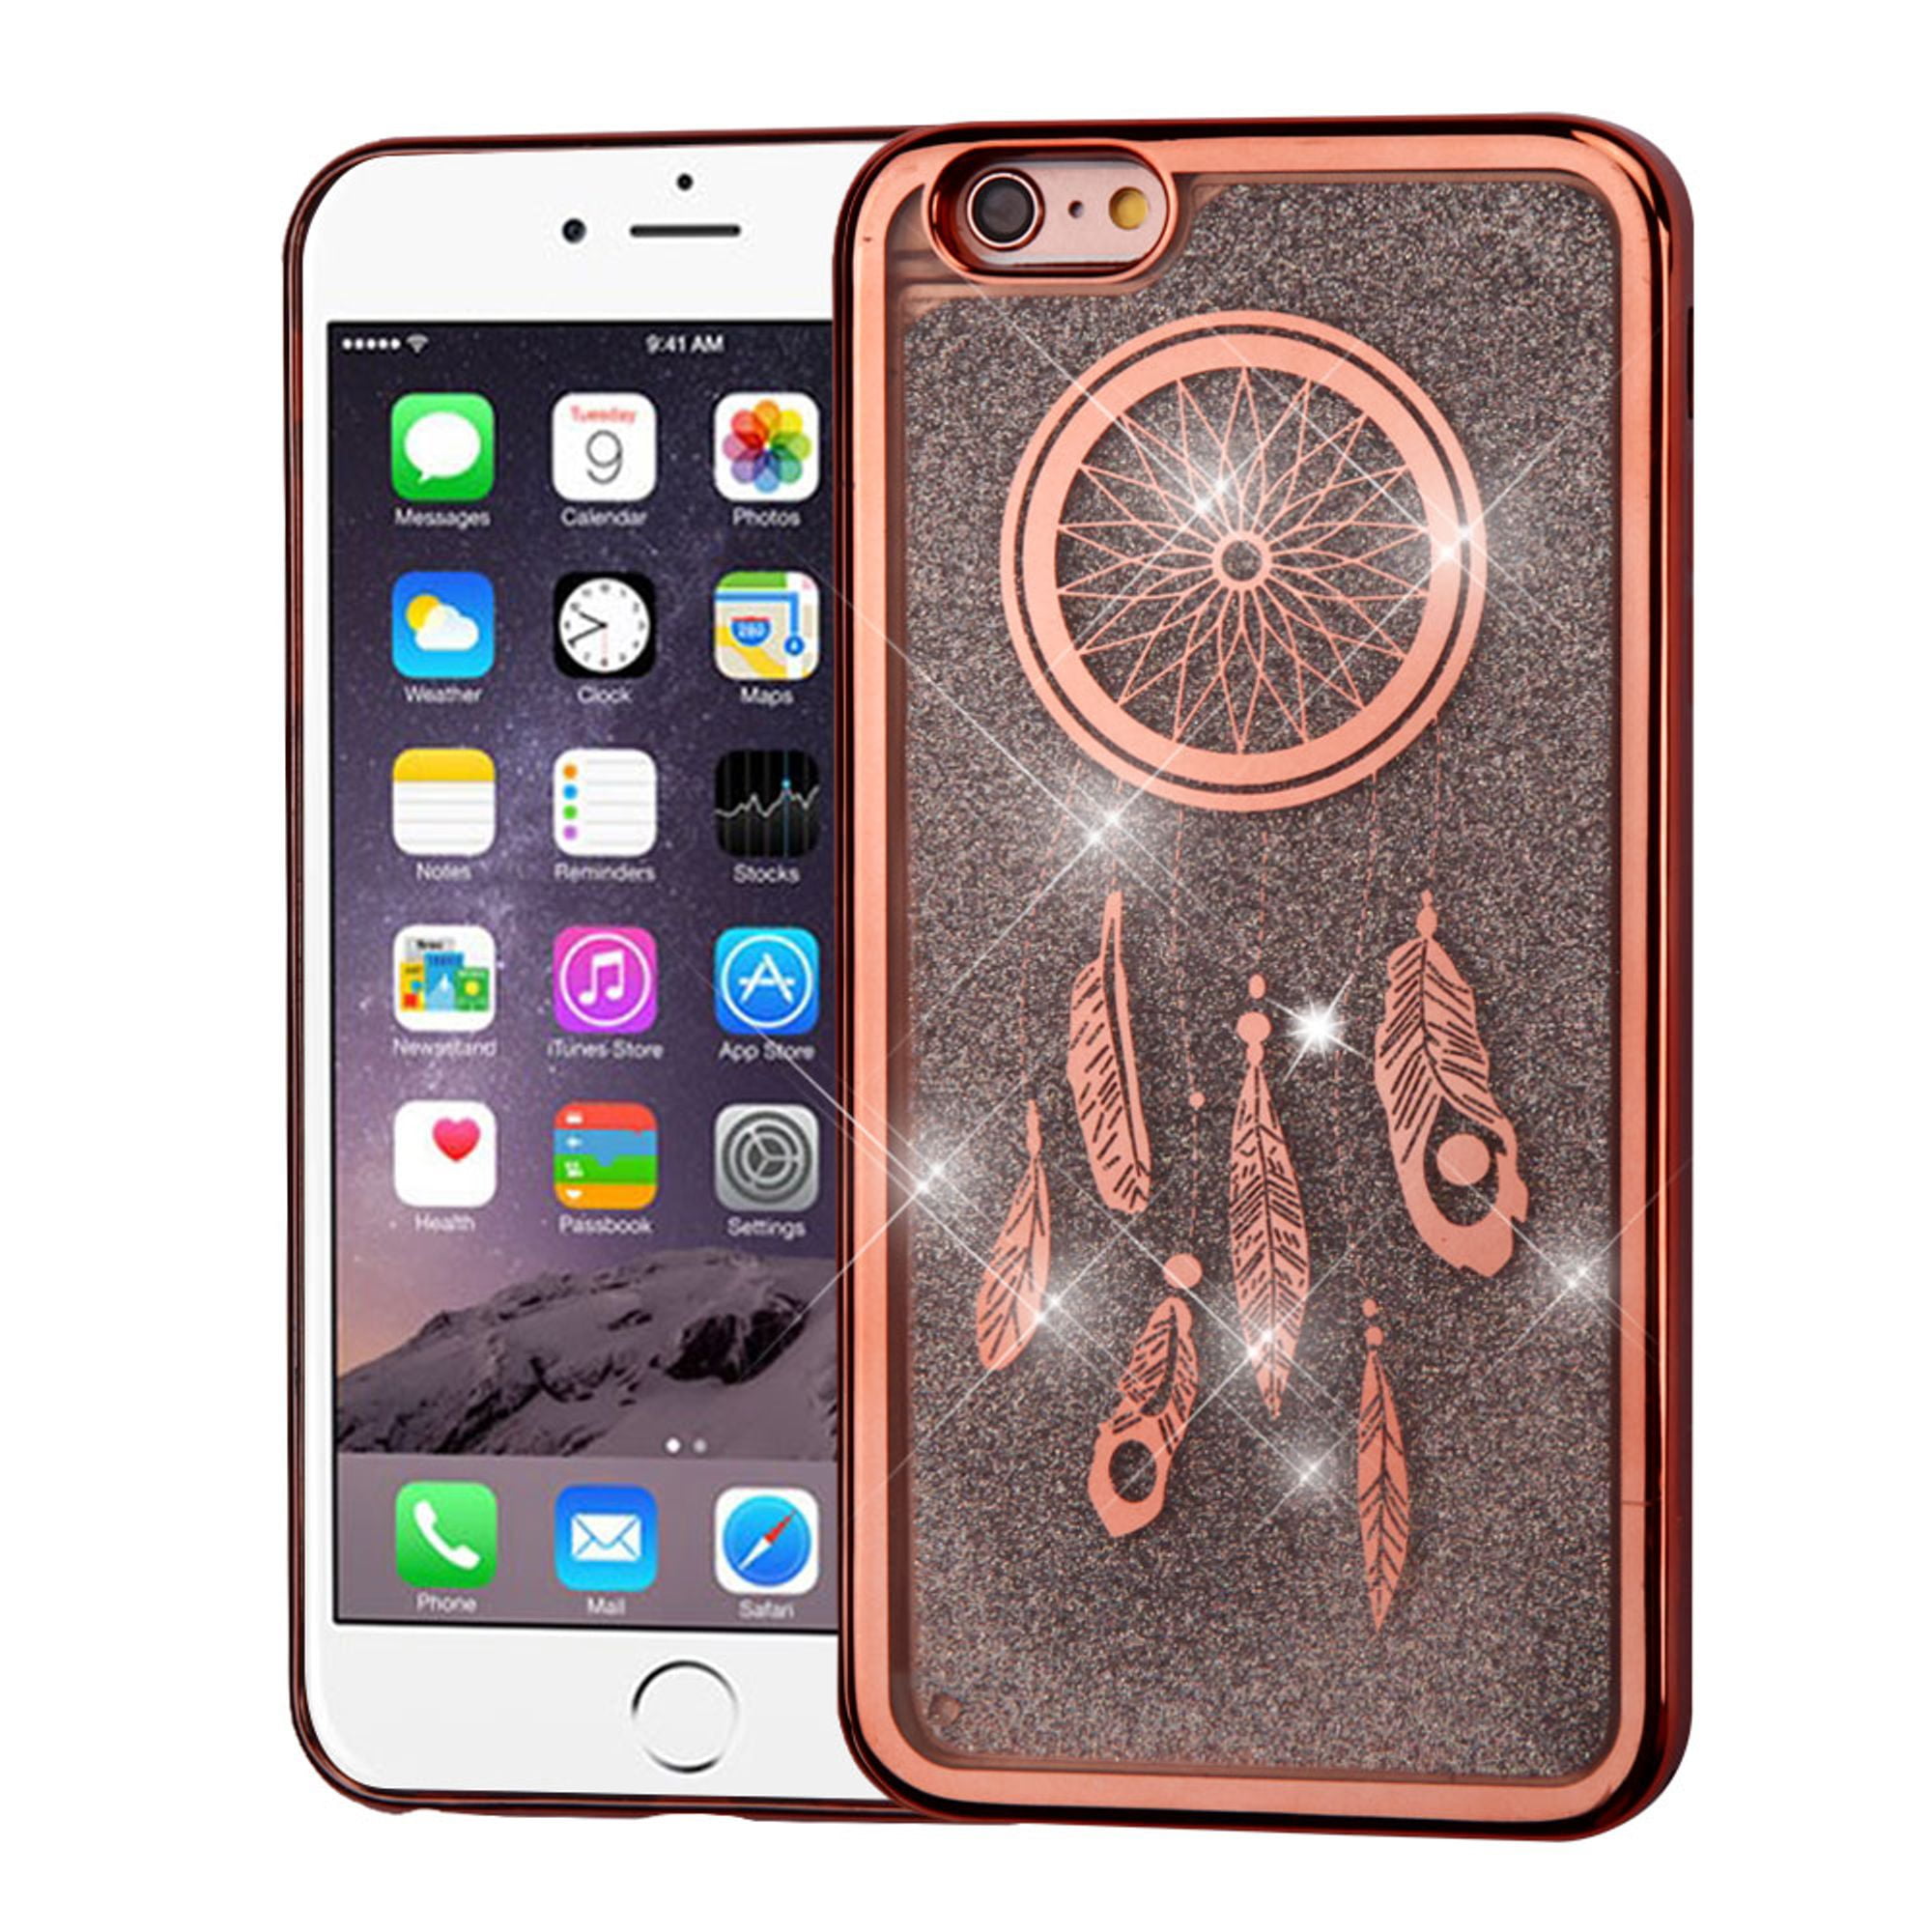 iPhone 6s plus case by Insten Luxury Quicksand Glitter Liquid Floating